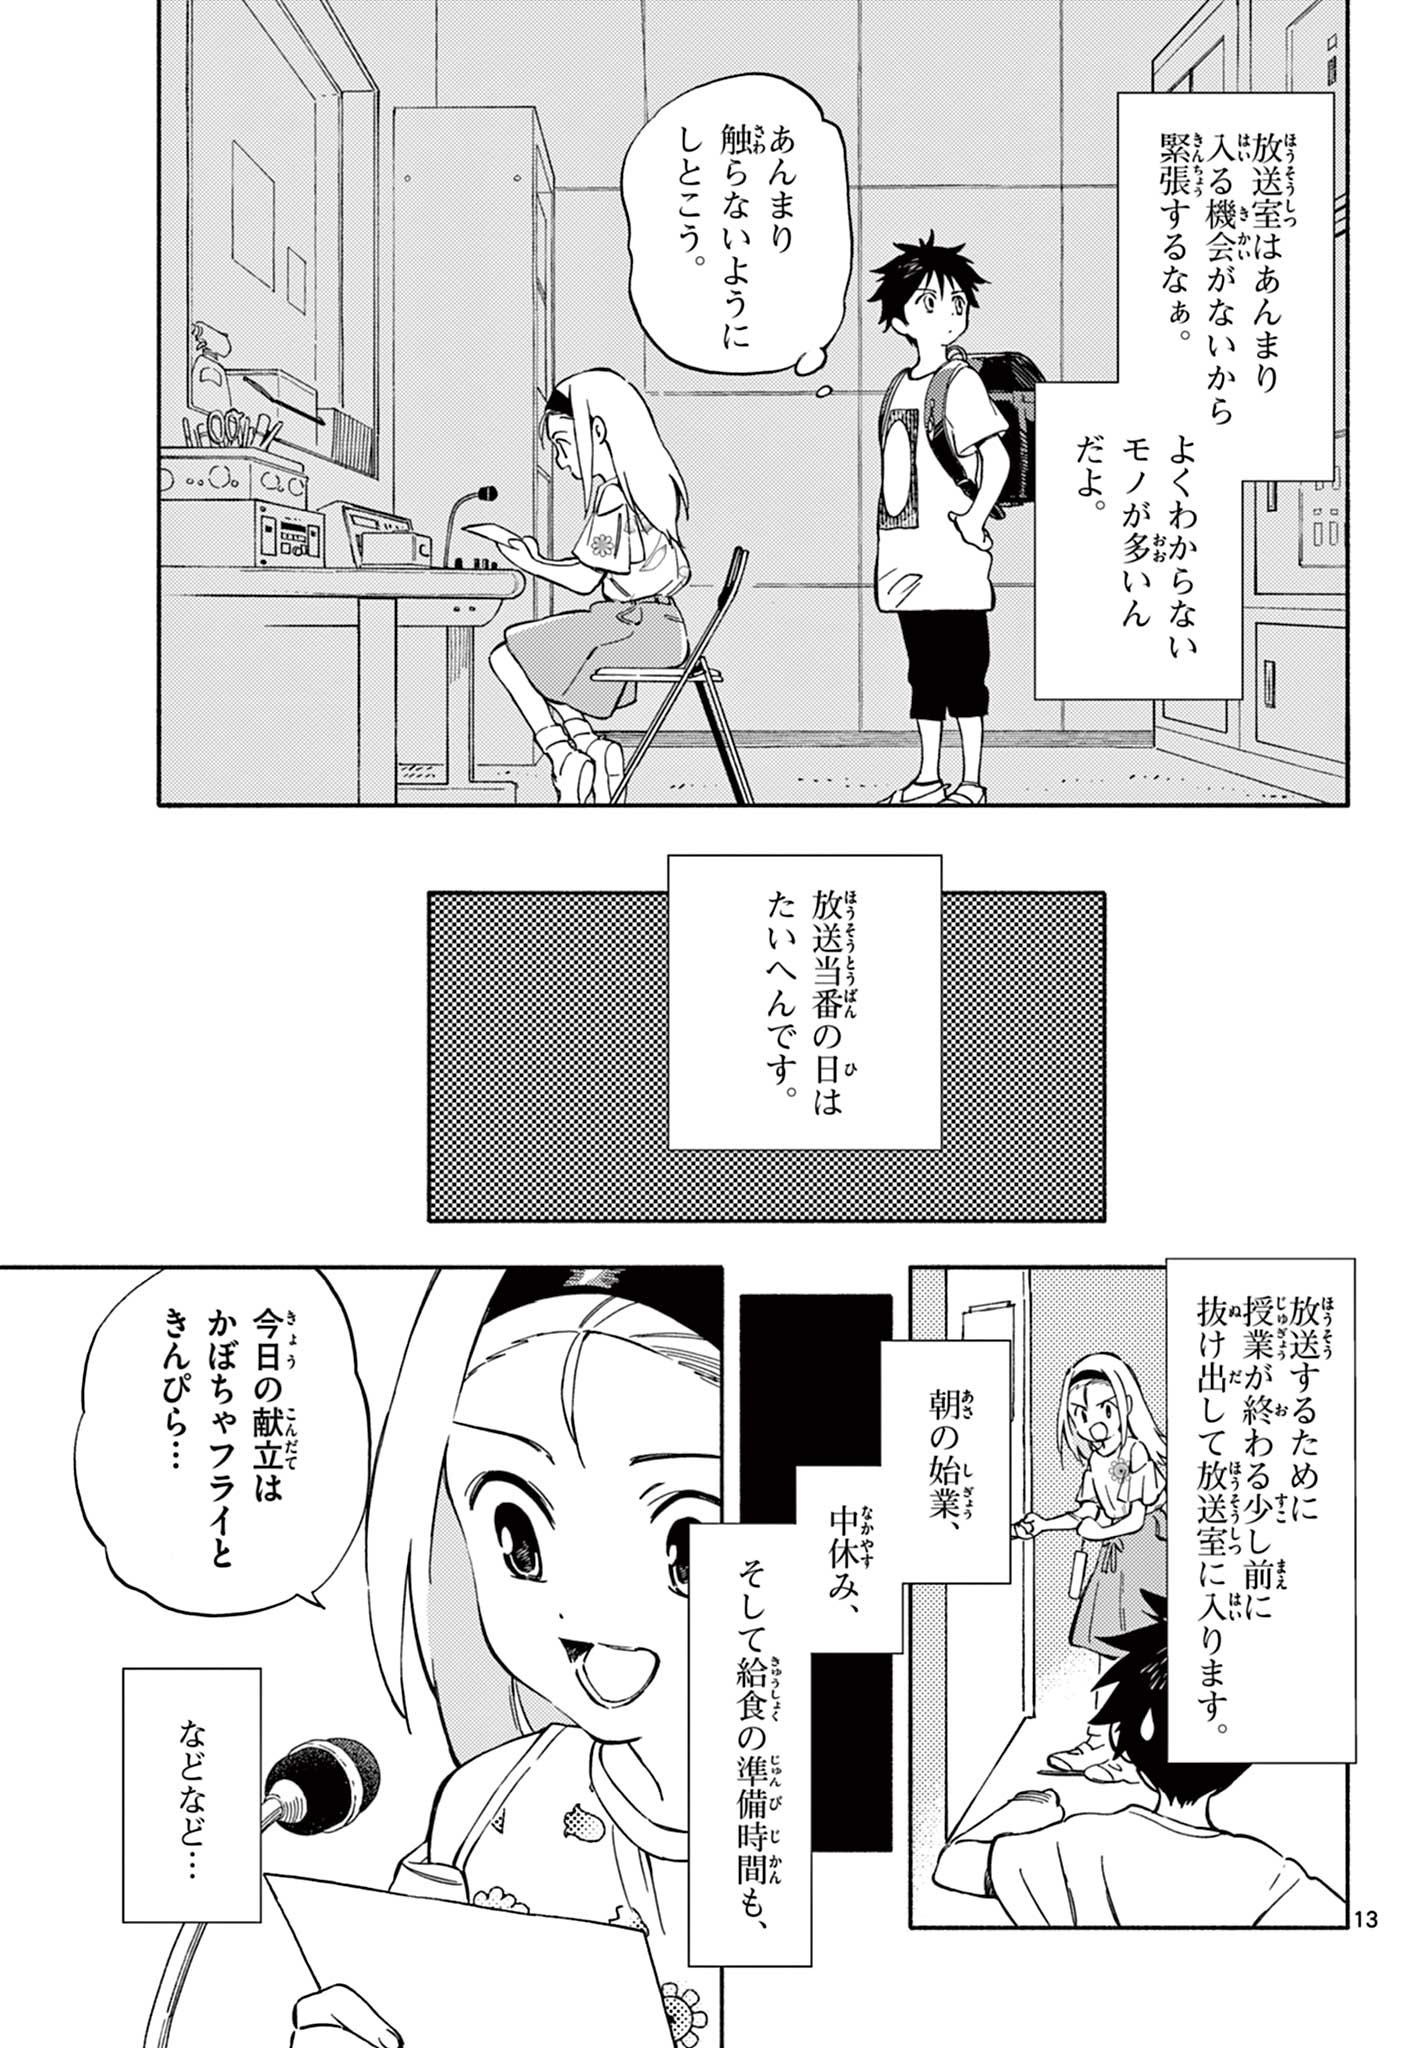 Nami no Shijima no Horizont - Chapter 8.1 - Page 13